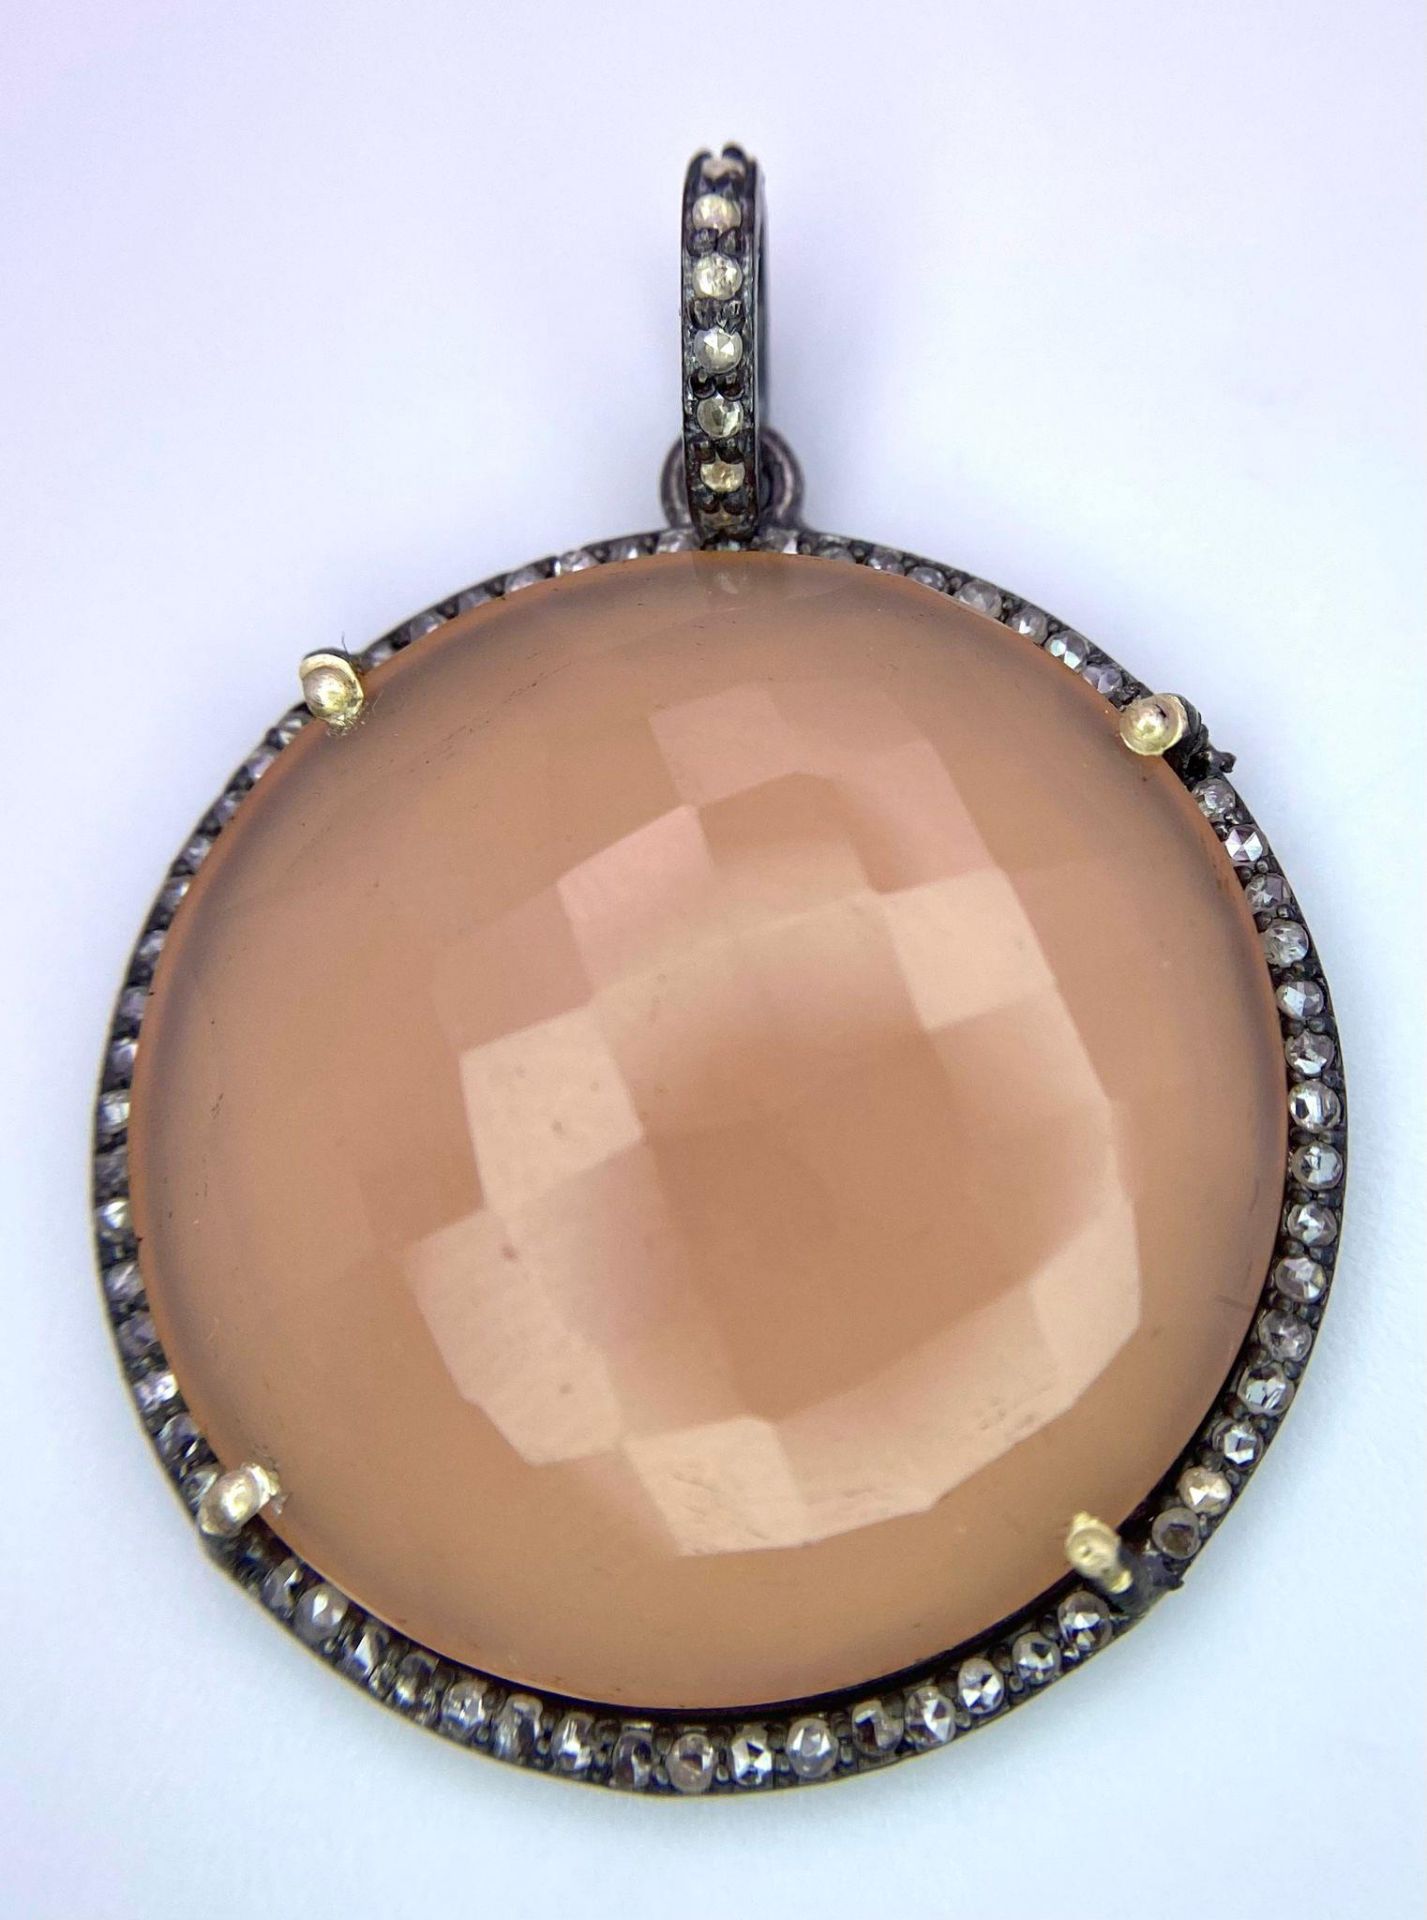 A Circular Rose Quartz and Diamonds Pendant. Faceted rose quartz cabochon with a diamond halo and